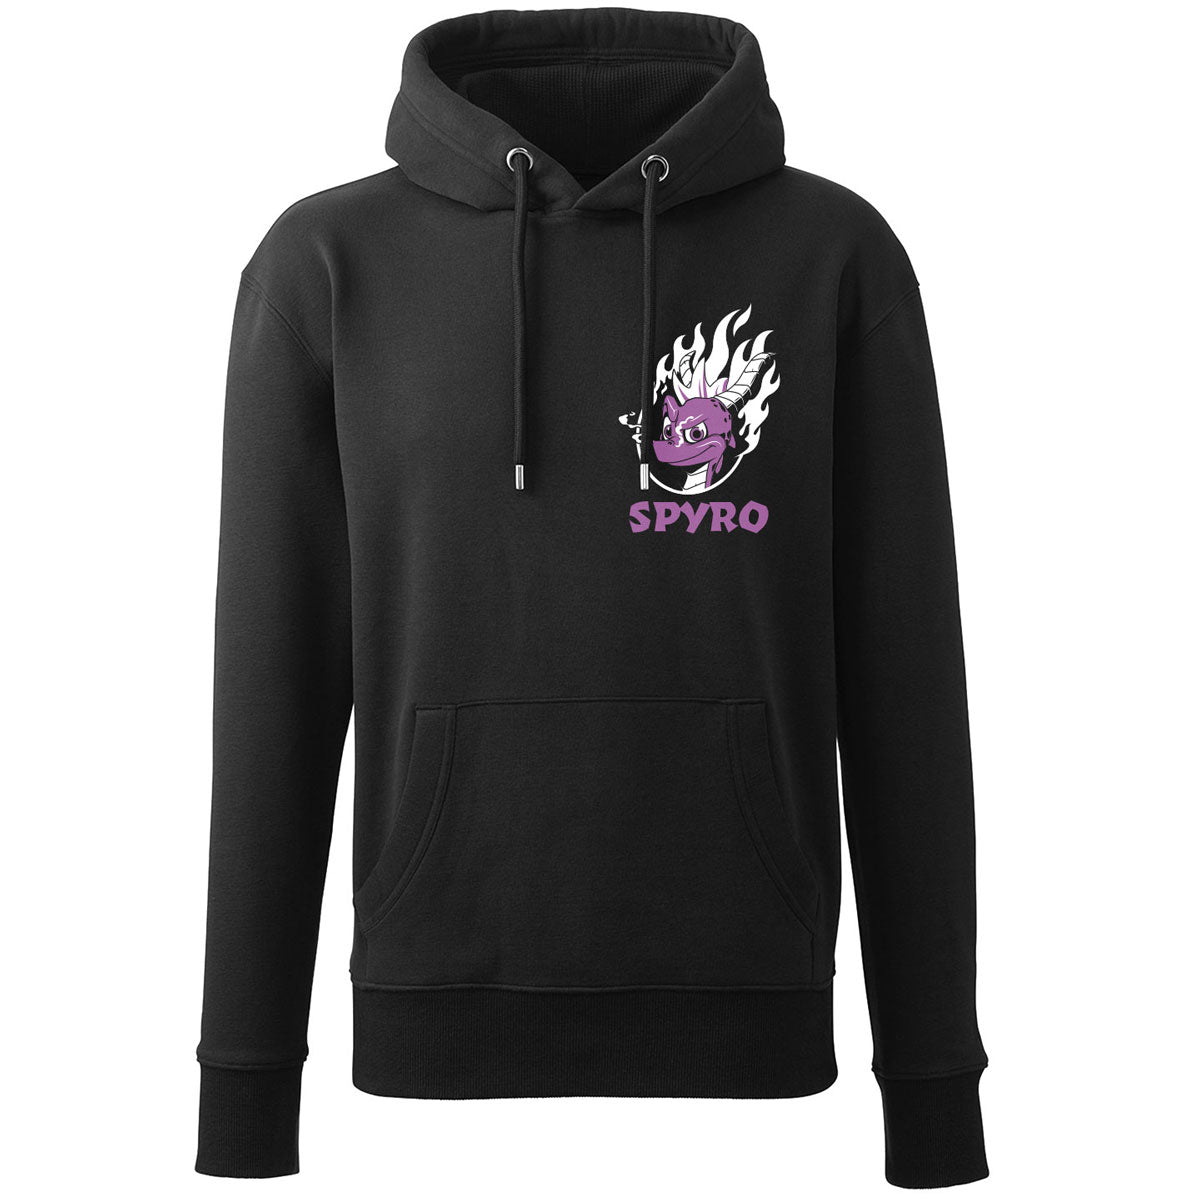 Spyro The Dragon Flaming Hoodie with Sleeve Prints, in Black